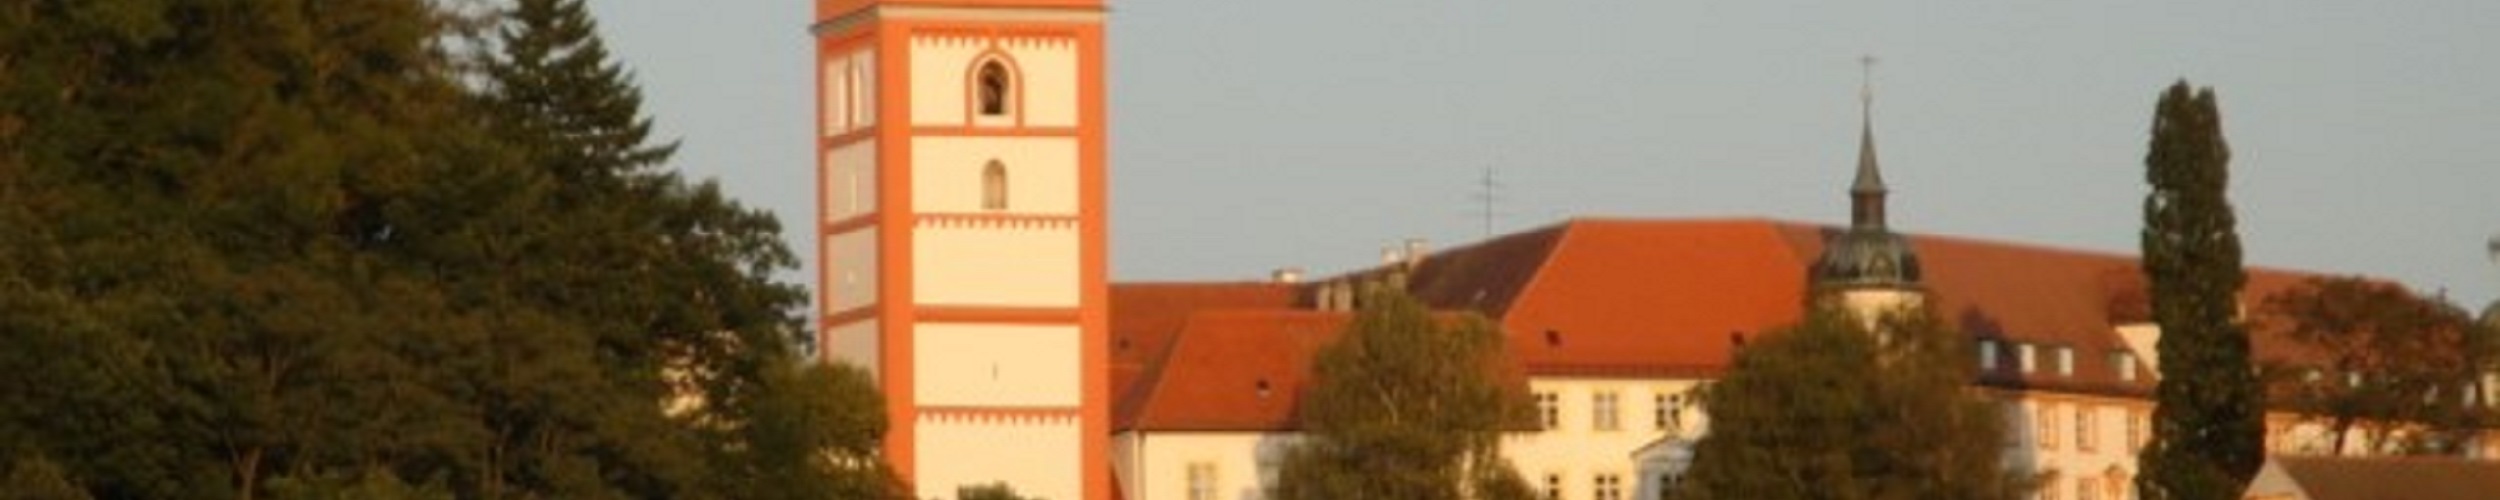 Basilika Scheyern